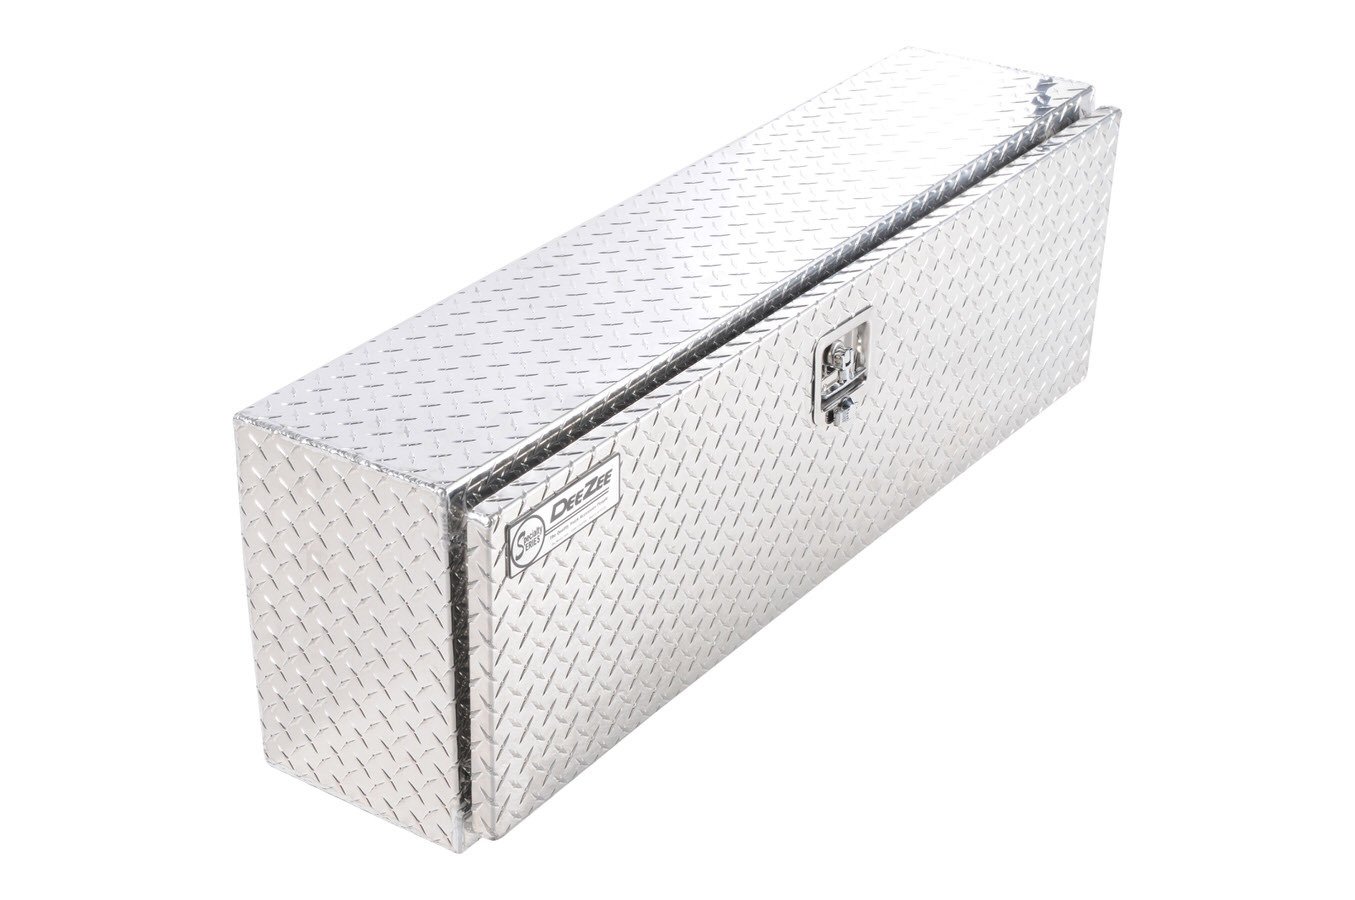 Tool Box - Specialty Top sider BT Aluminum